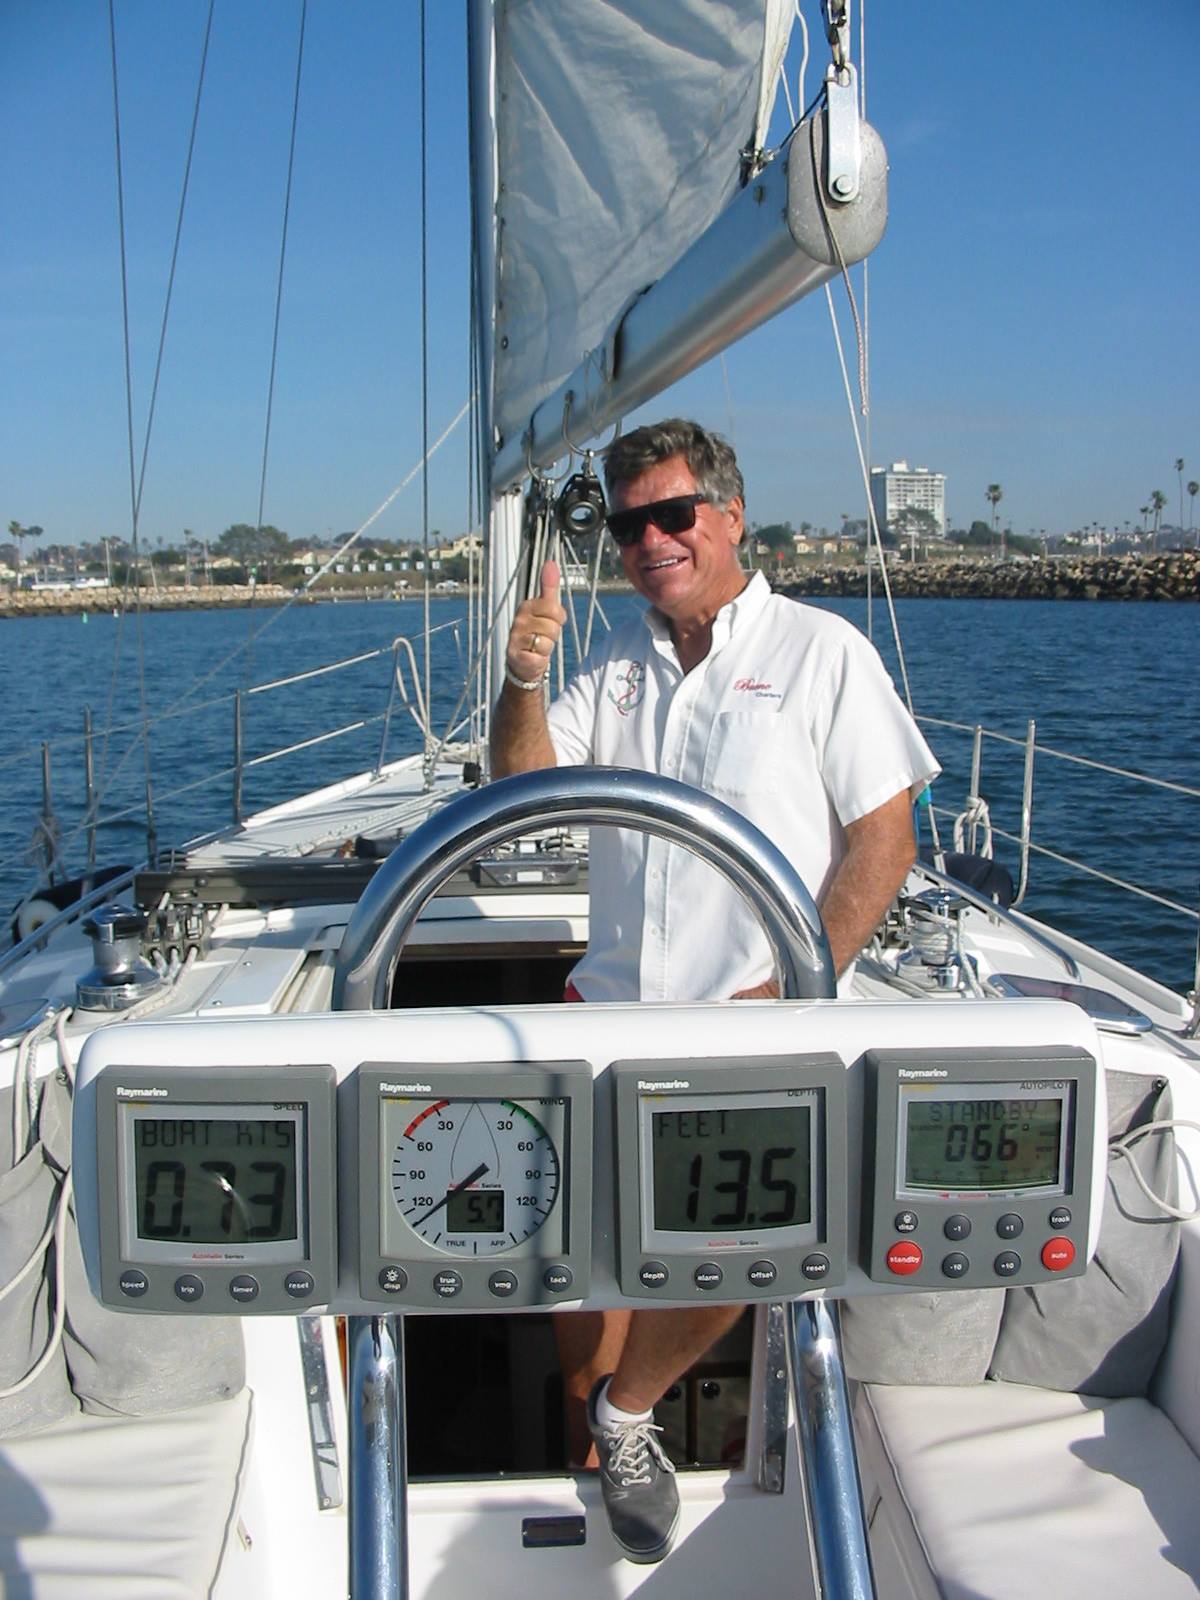 oceanside sailboat rentals